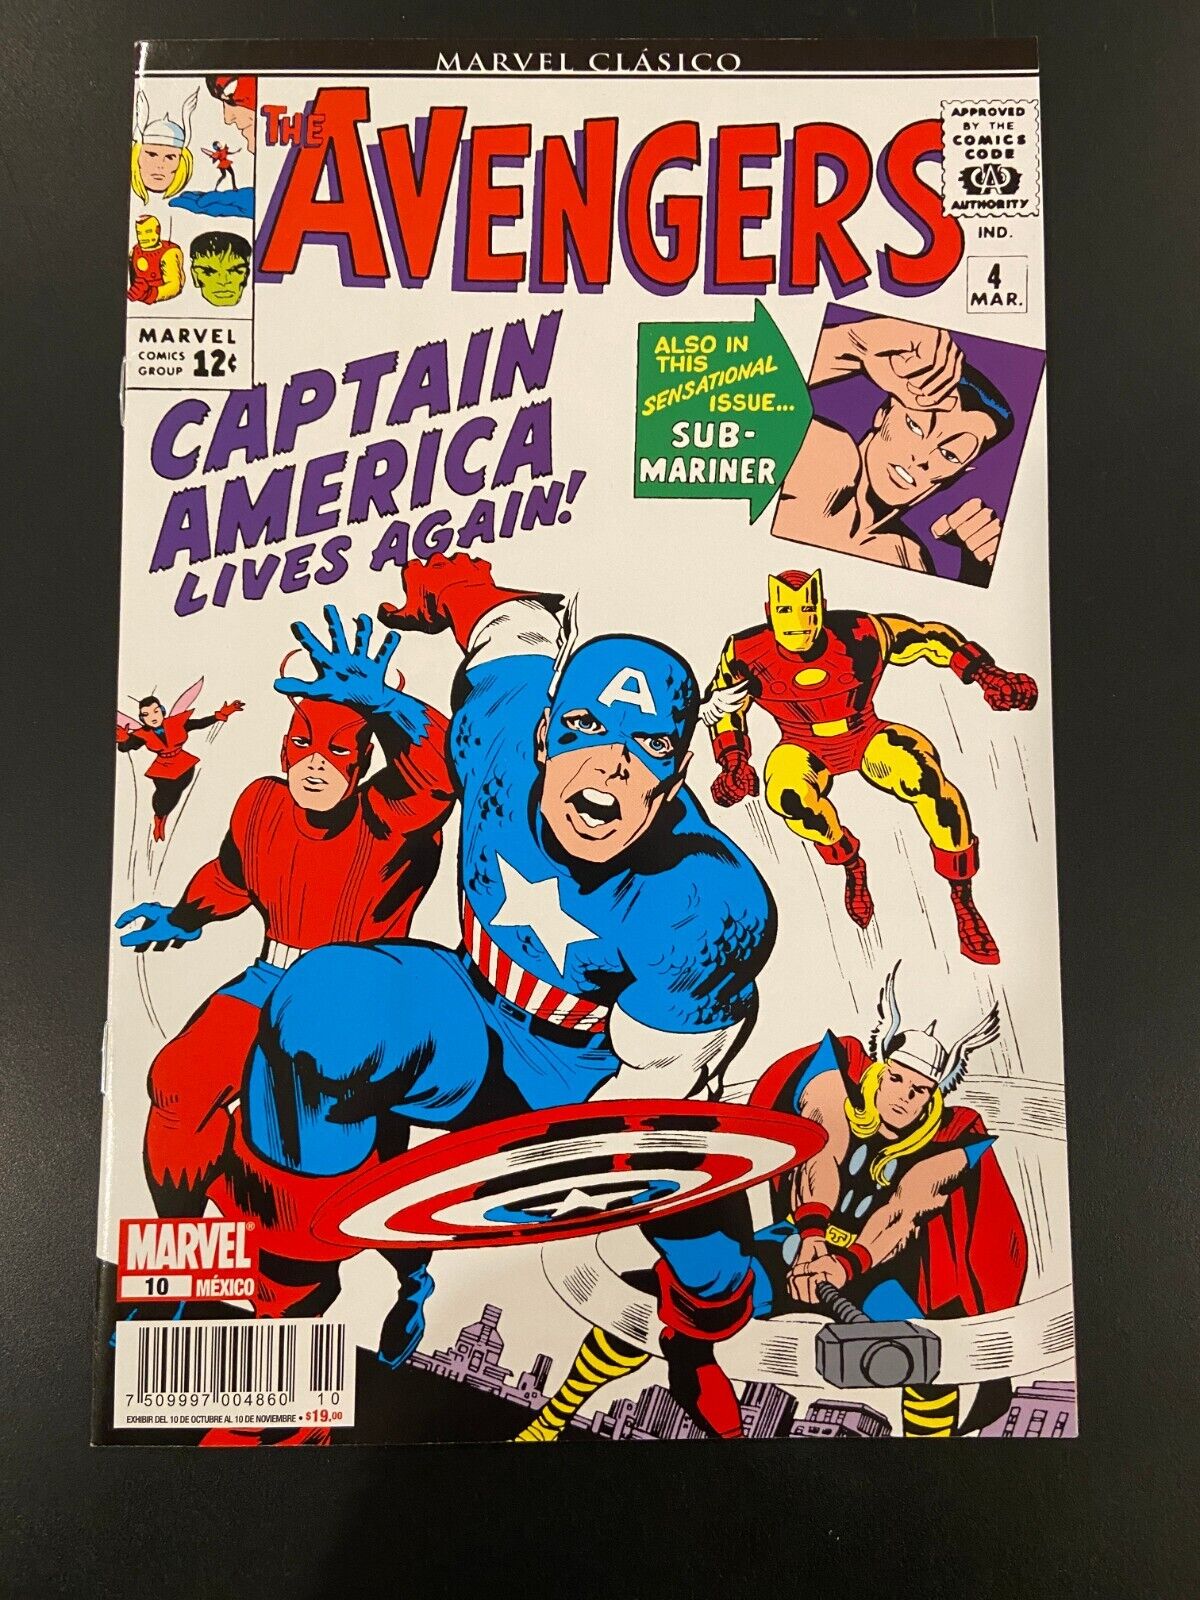 The Avengers #4 1st App Captain America written in Spanish 2008 Mexican reprint